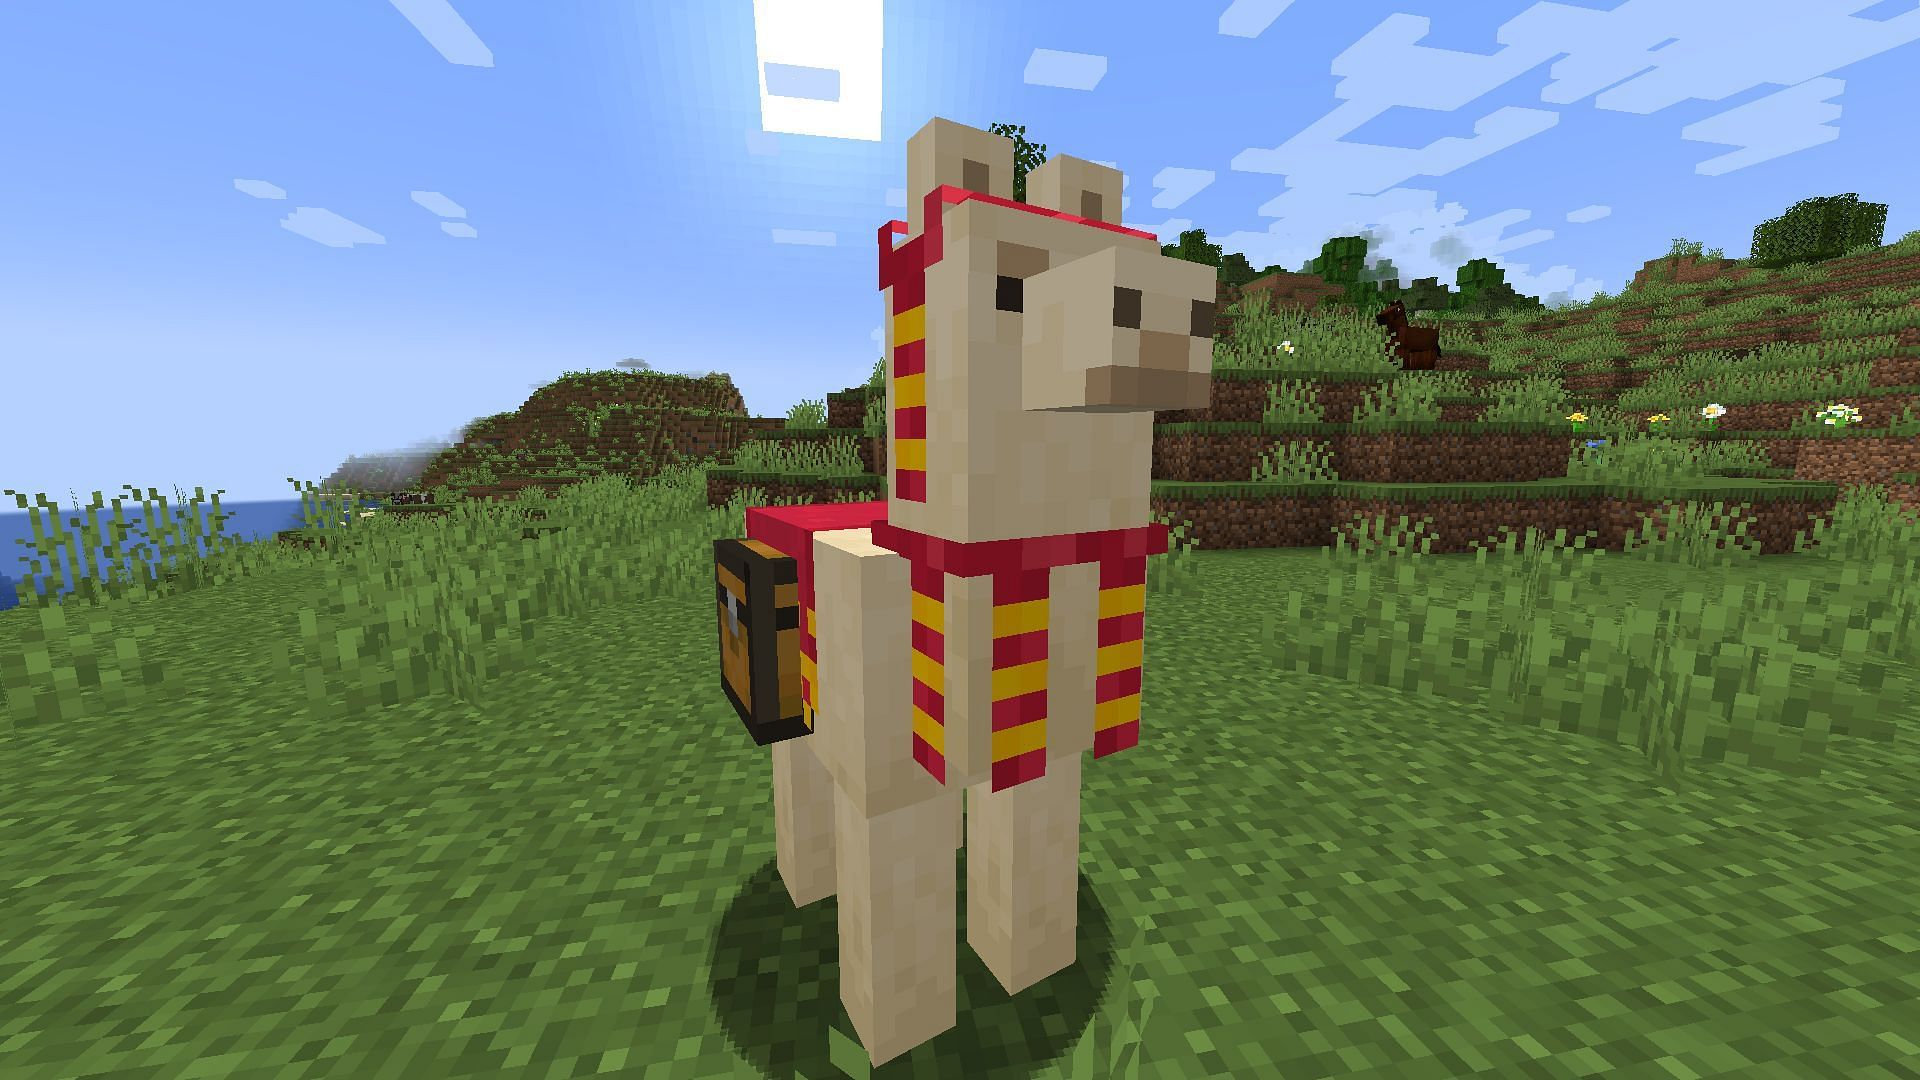 Trader llama will have a different appearance (Image via Mojang)